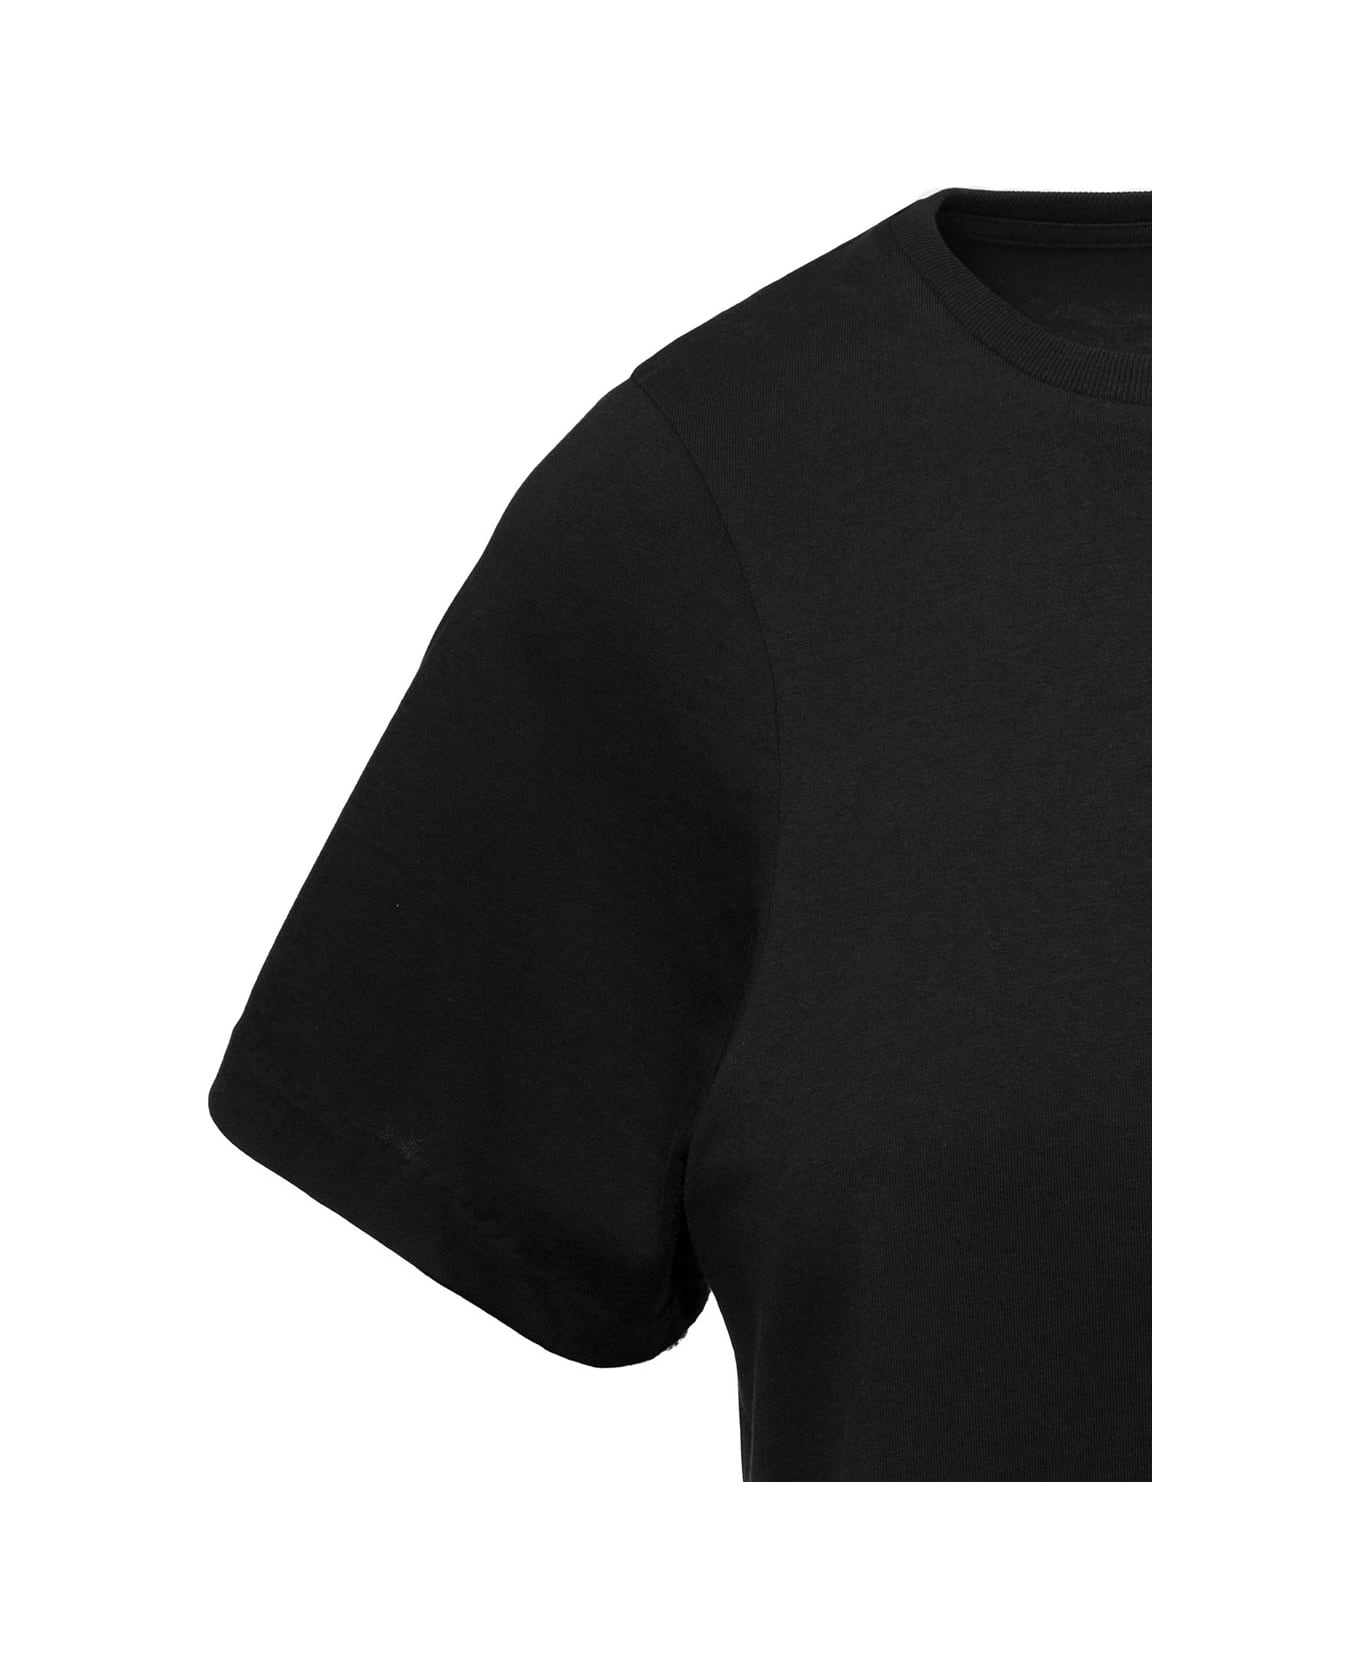 Totême Crewneck T-shirt In Black Cotton Woman - Black